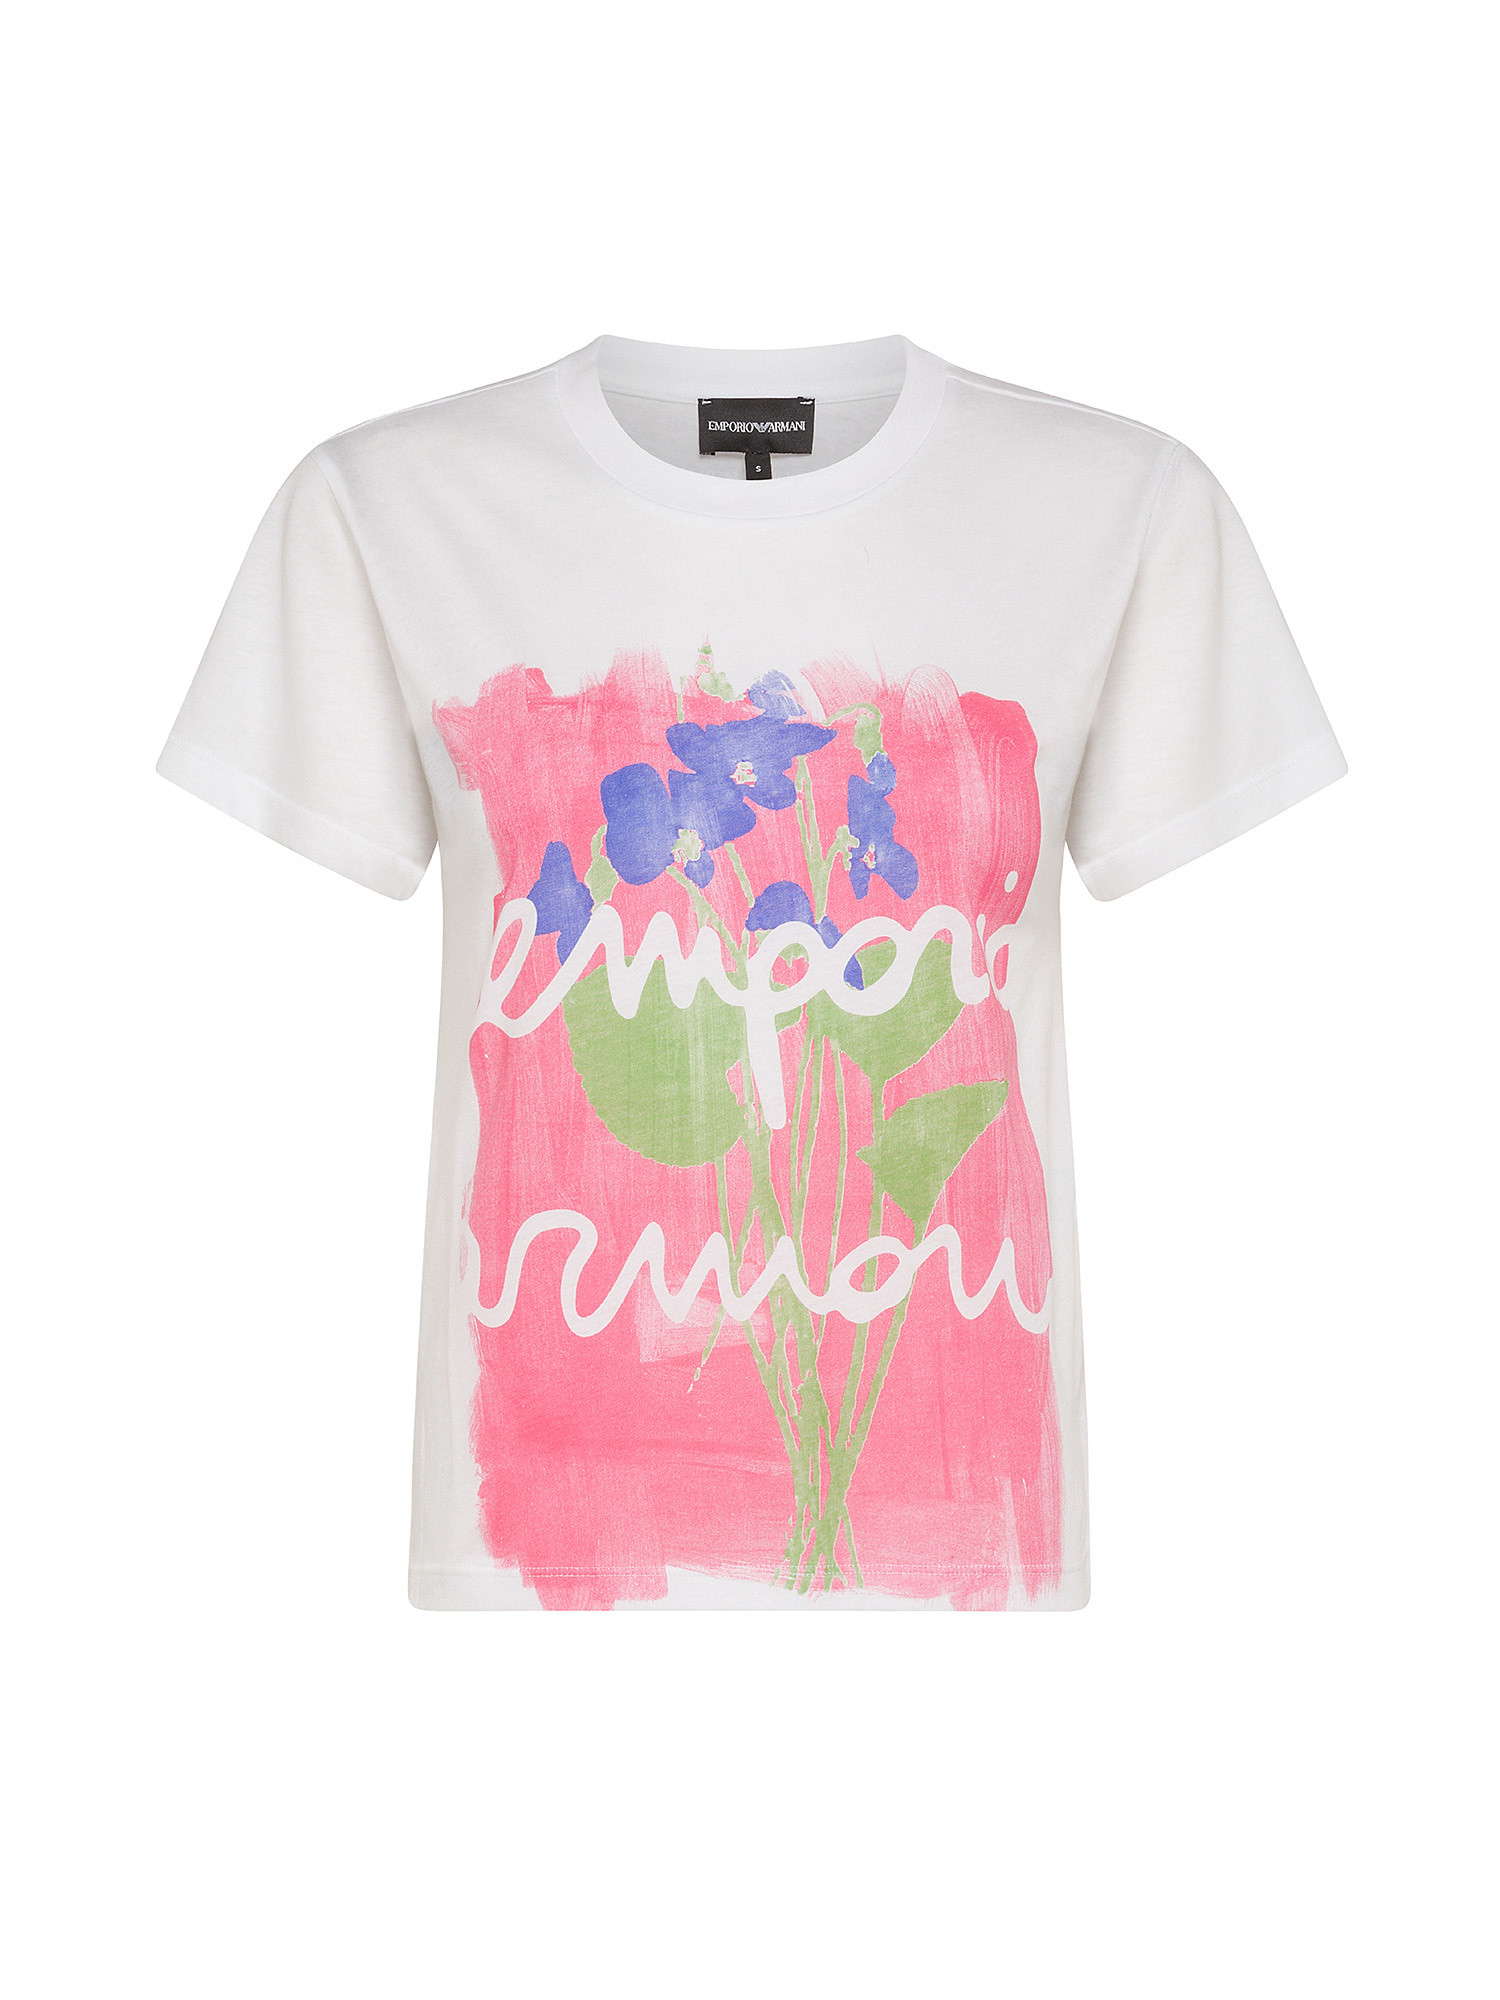 Emporio Armani - T-shirt girocollo con stampa acquarello, Bianco, large image number 0